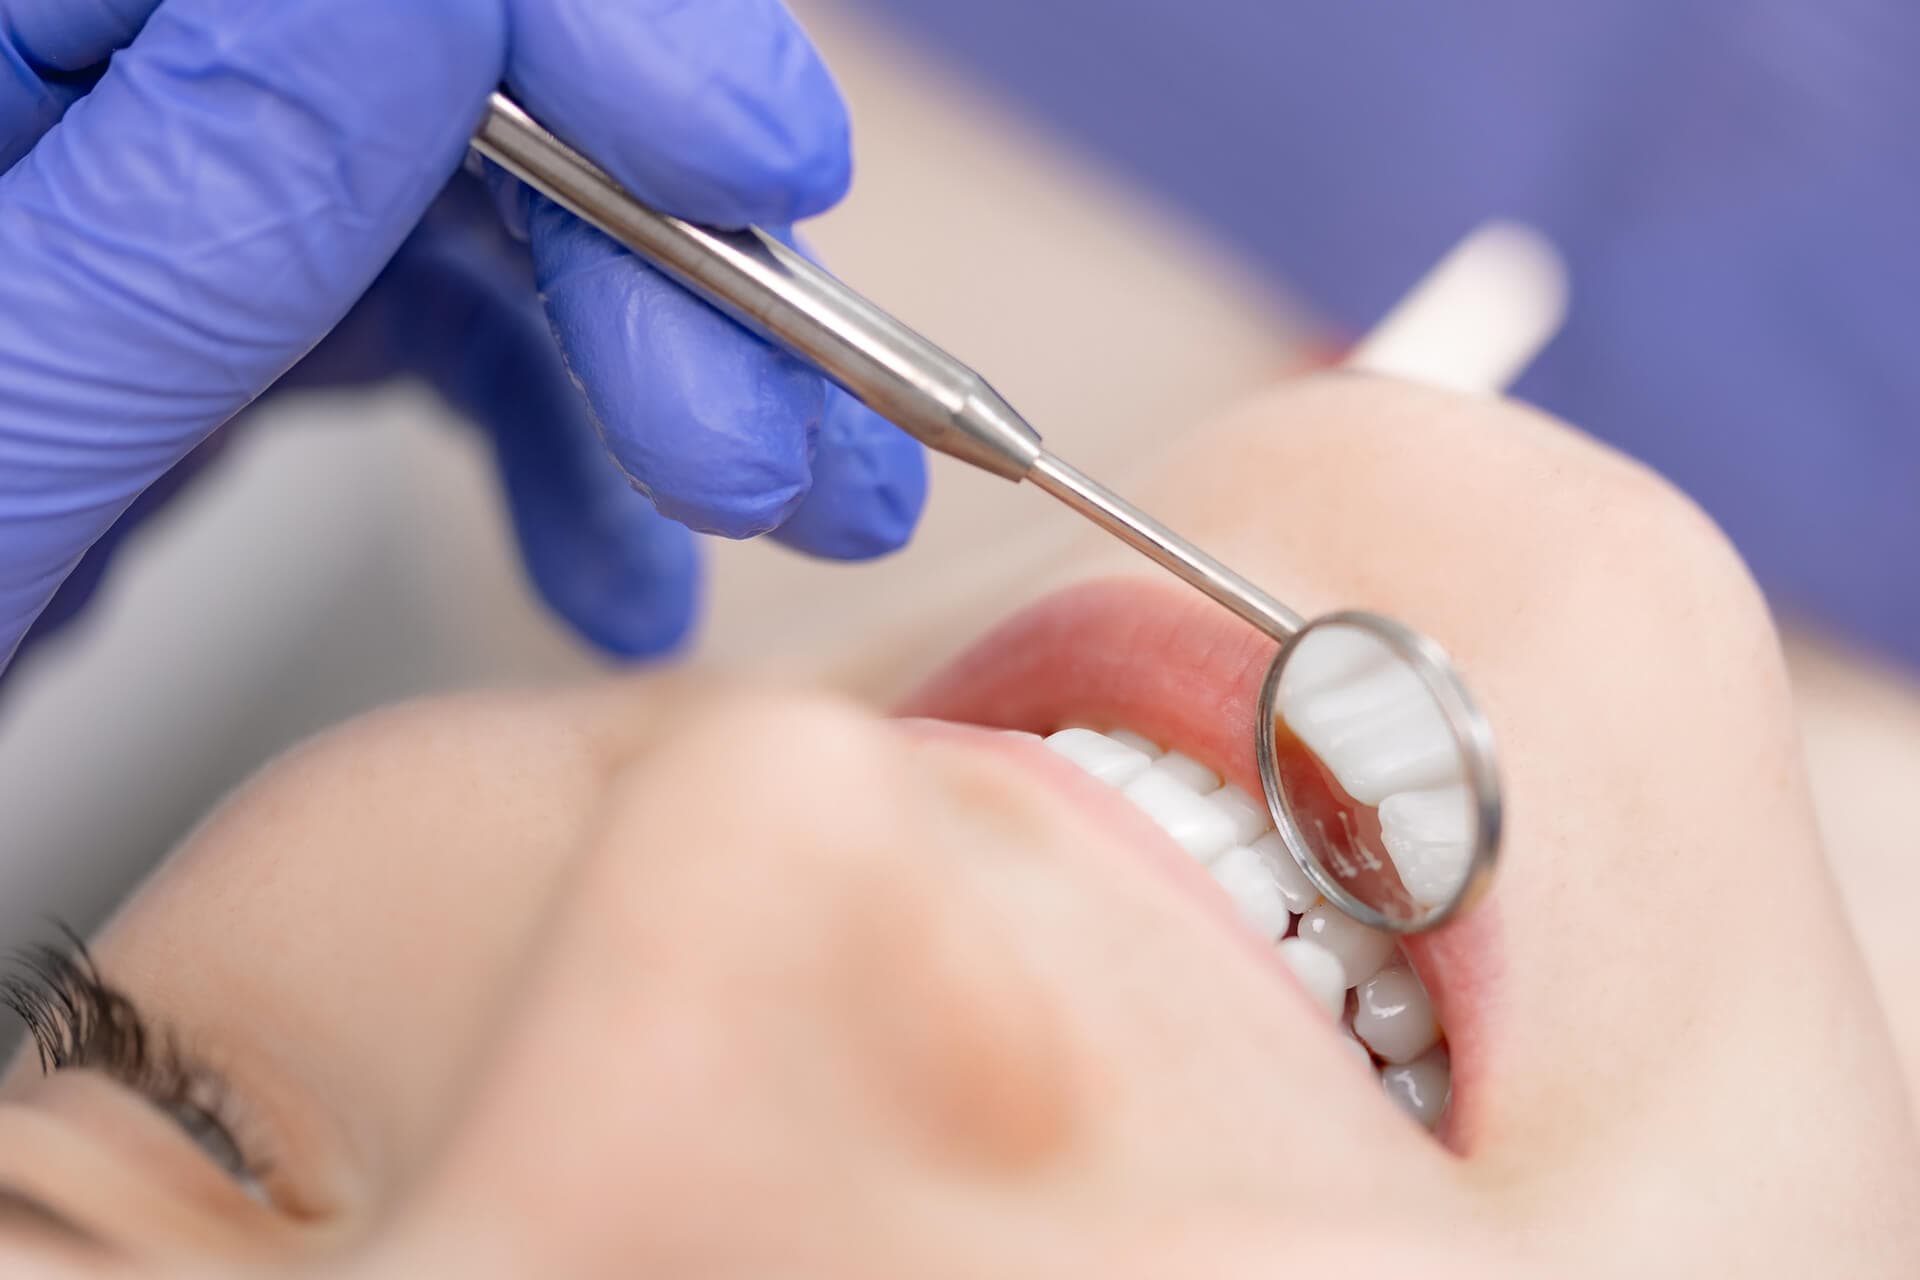 Centro Odontológico Dentine - Odontología conservadora